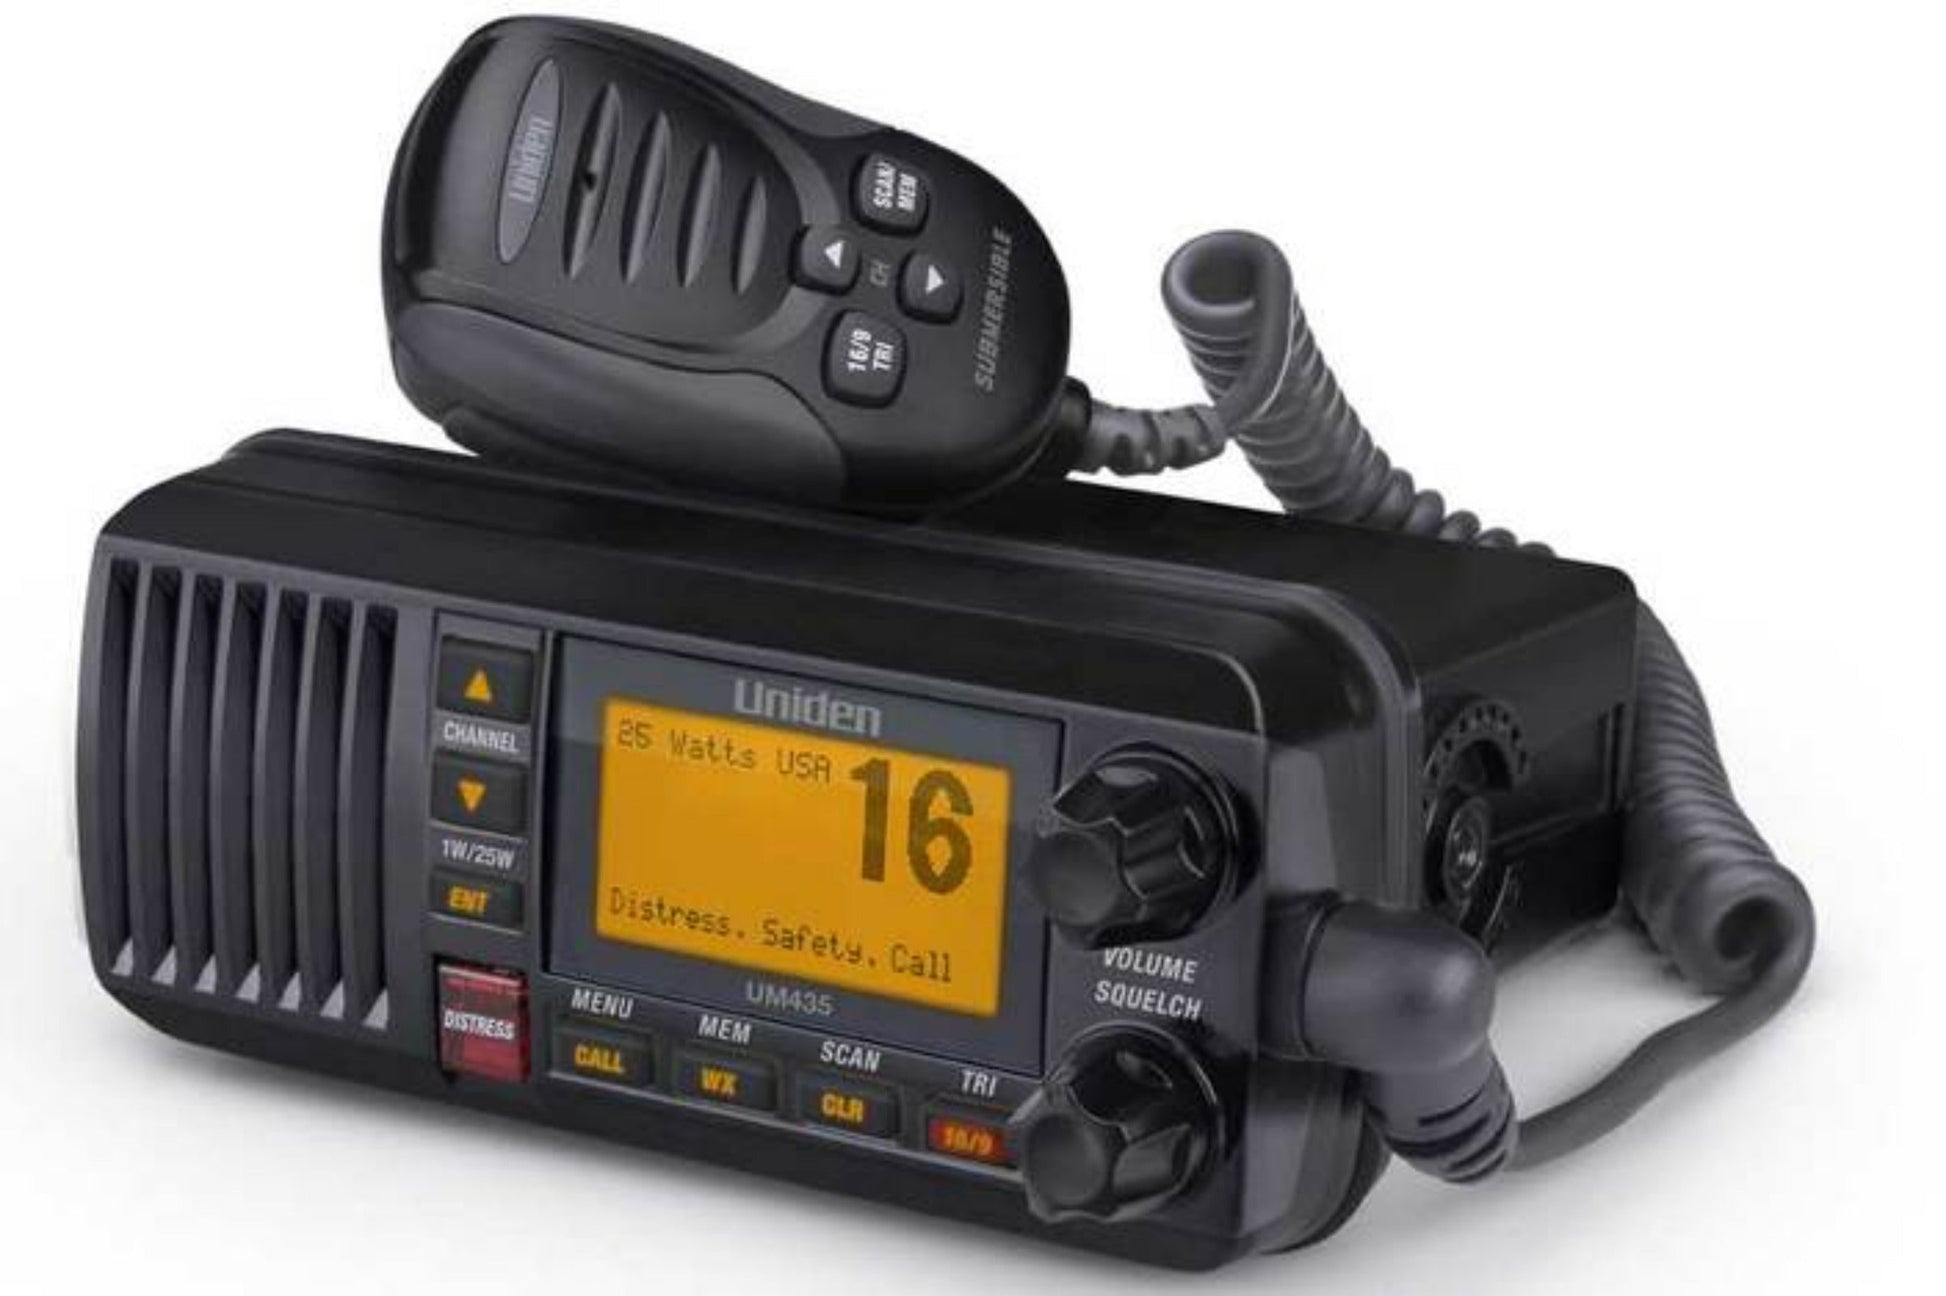 2 25watt full featured fixed mount VHF black marine radio UM435BK marine radios uniden